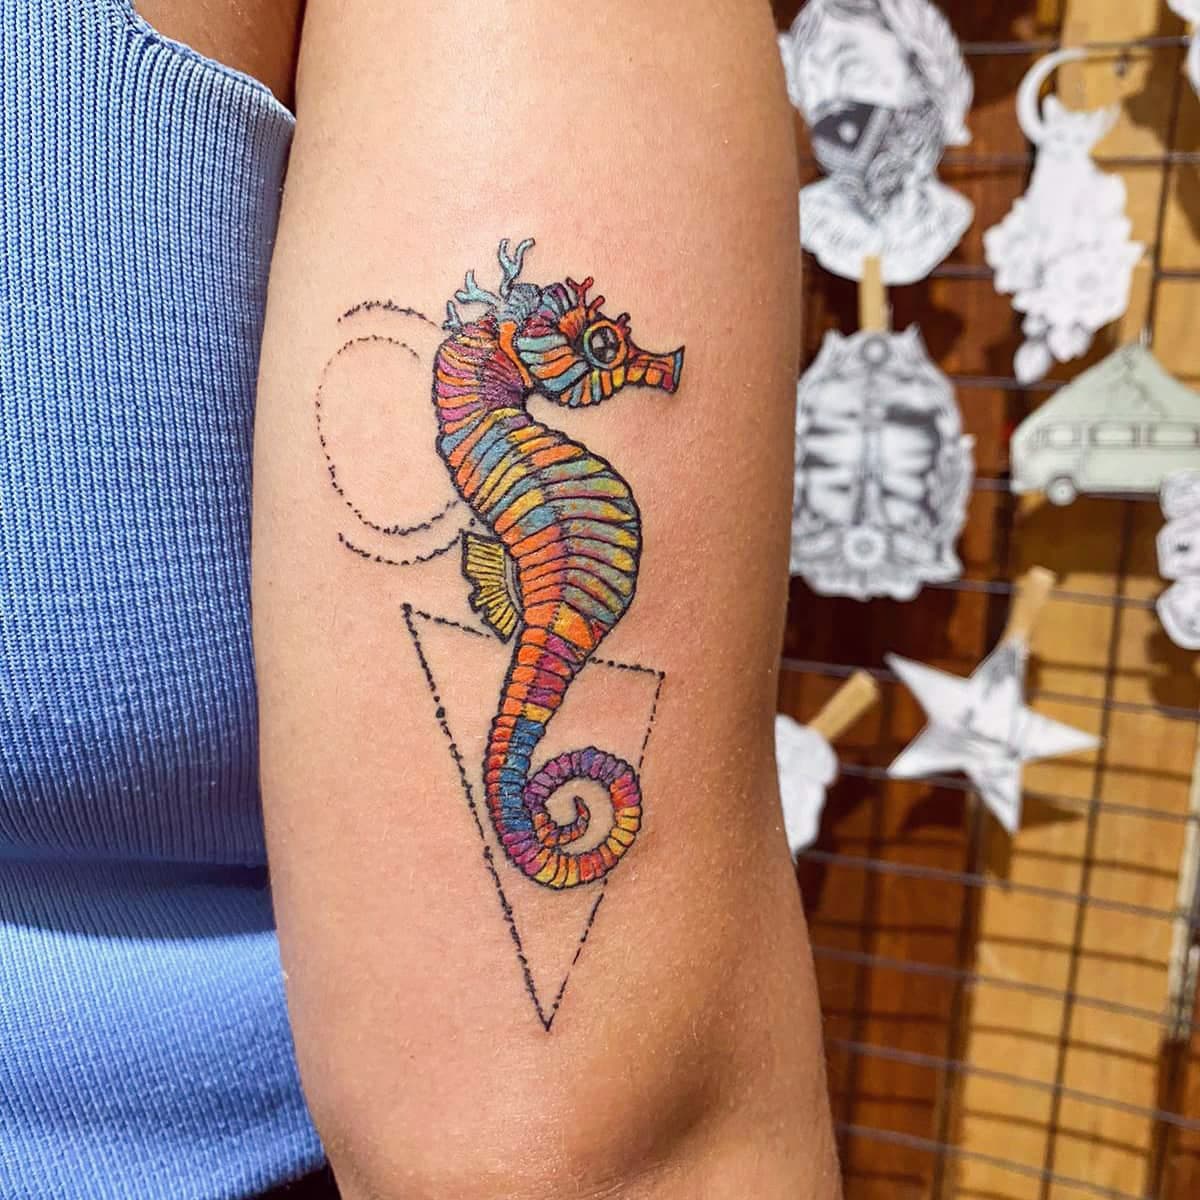 Seahorse Tattoo Small Colorful Symmetrical Design